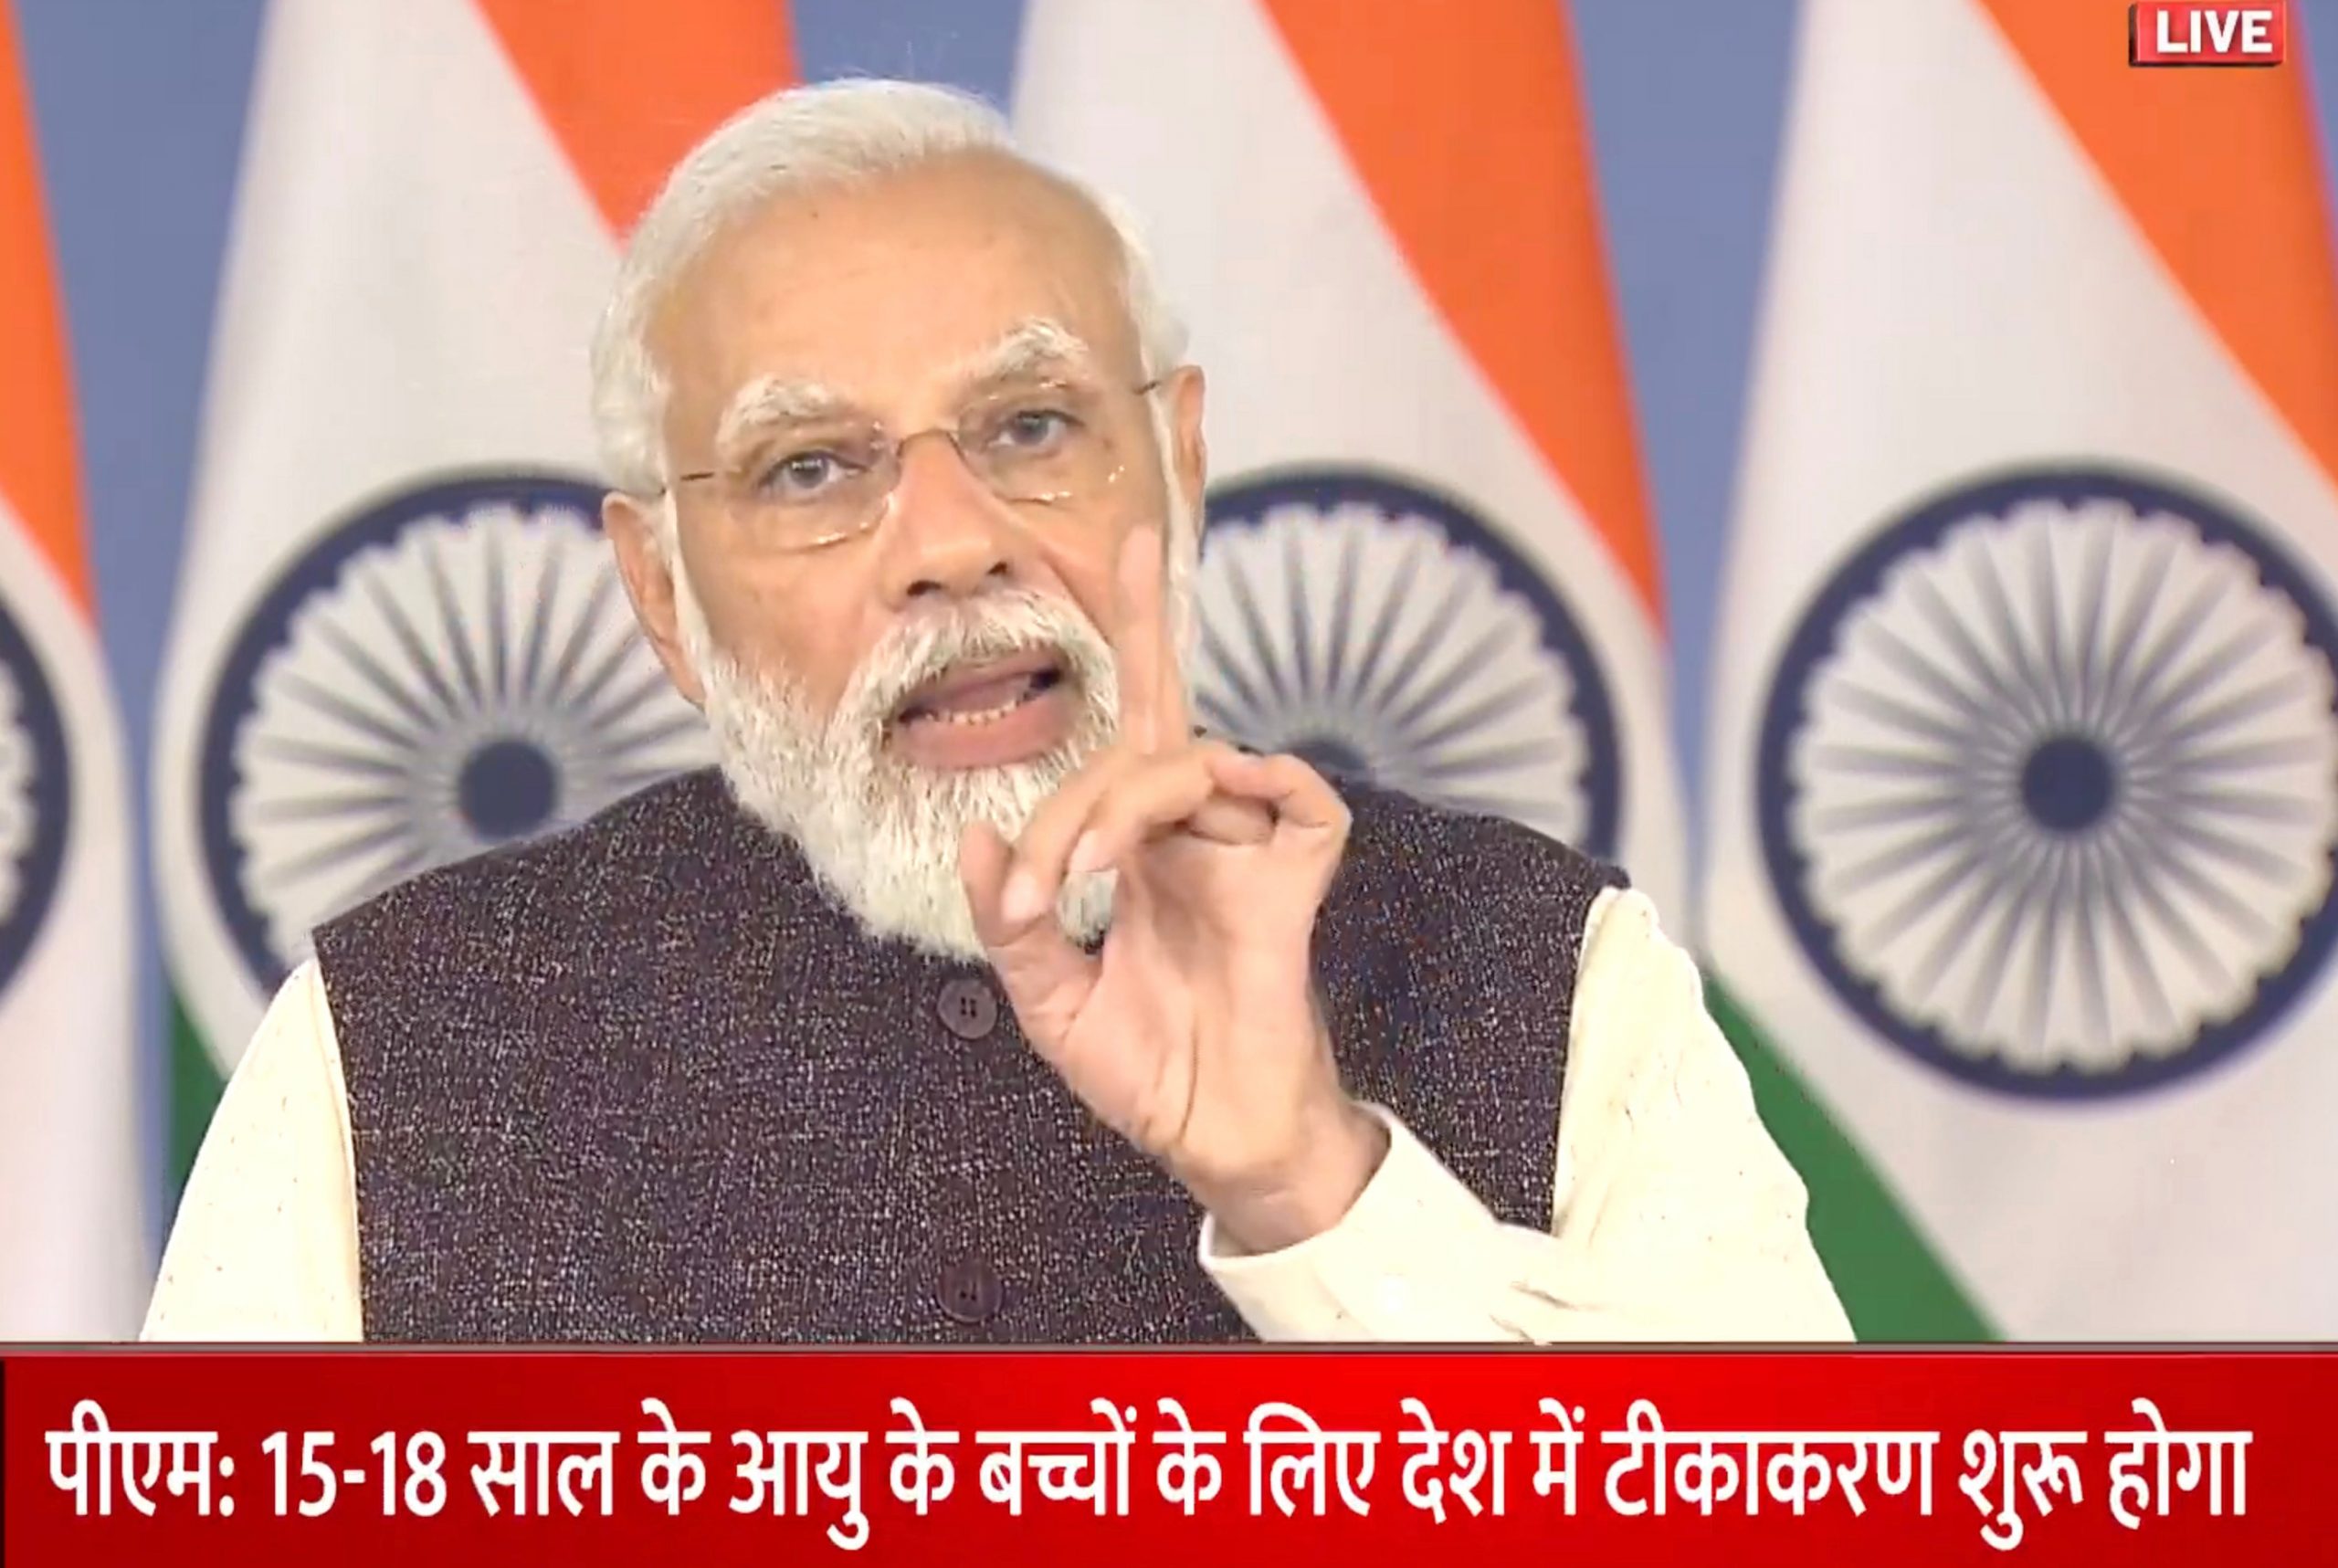 PM Modi pays tribute to Group Captain Varun Singh in ‘Mann Ki Baat’ address